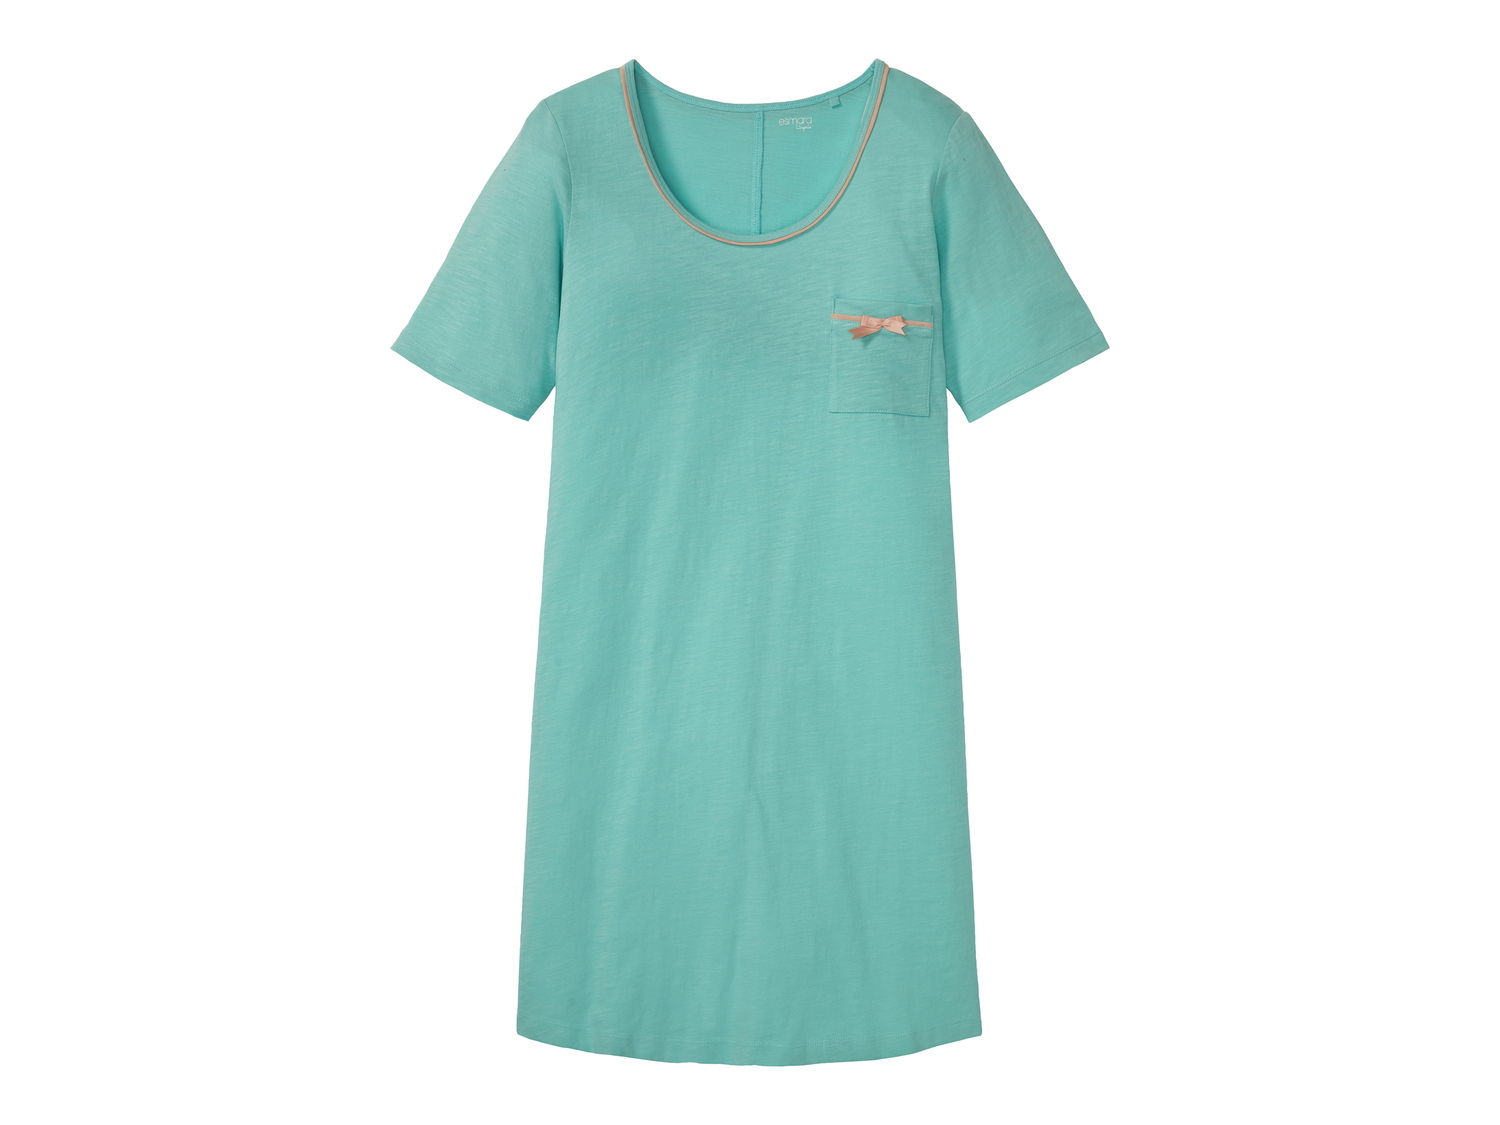 Maxi T-shirt da notte per donna Esmara Lingerie, prezzo 6.99 € 
Misure: S-L 
- ...